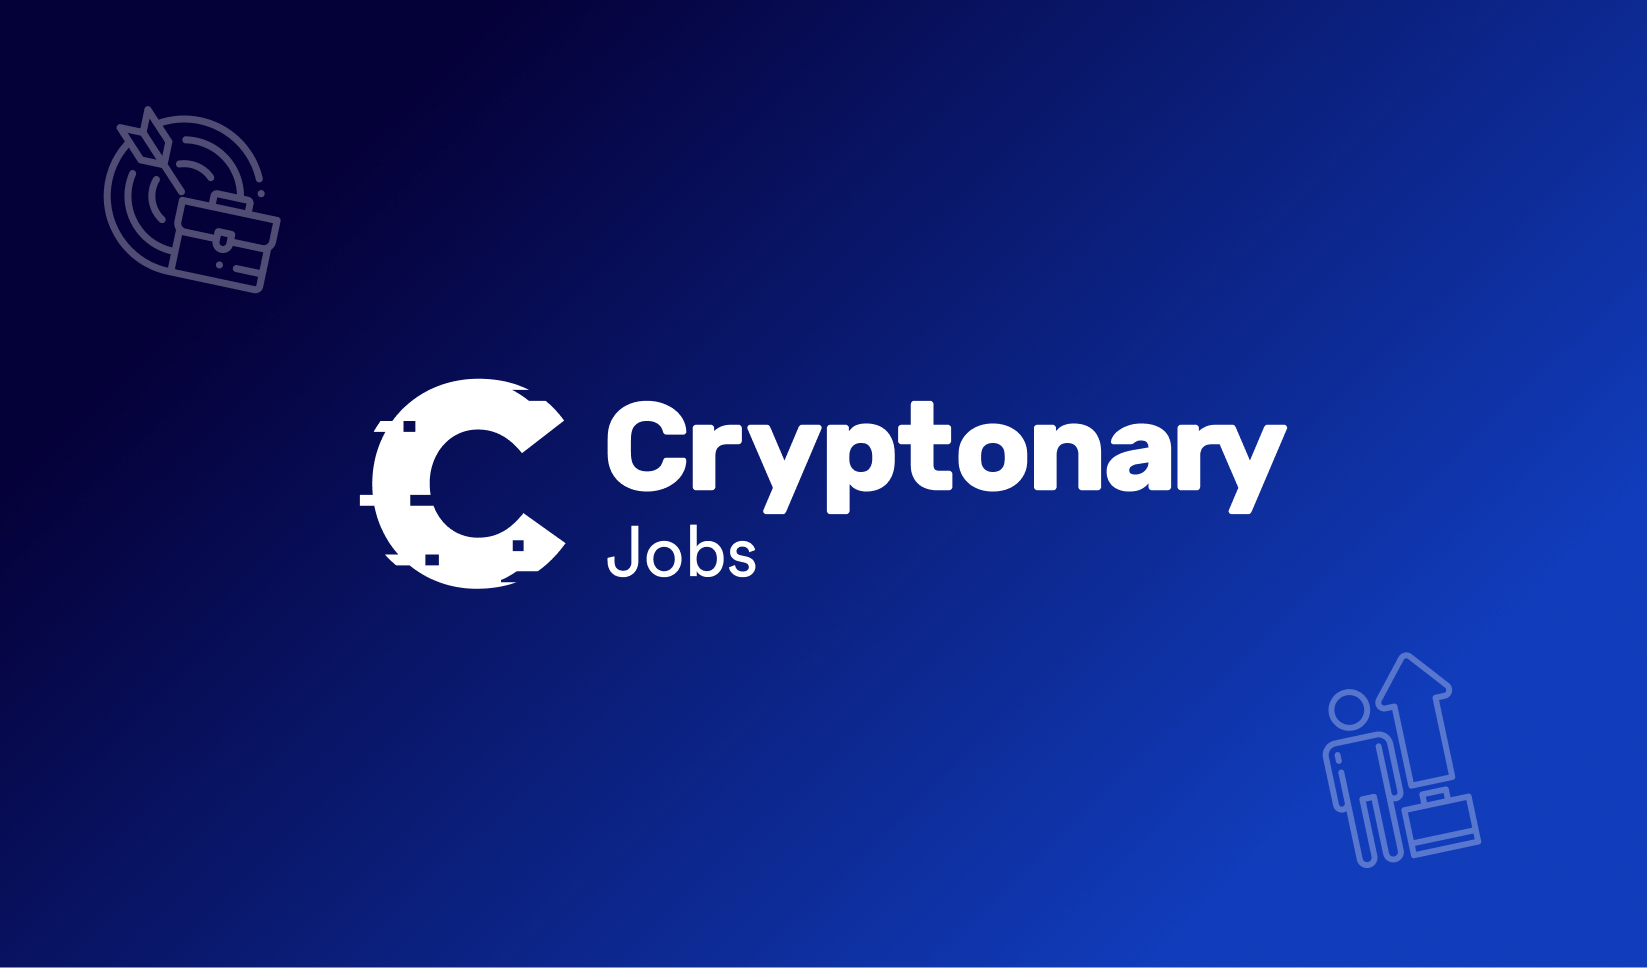 Cryptocurrency Jobs | Cryptonary